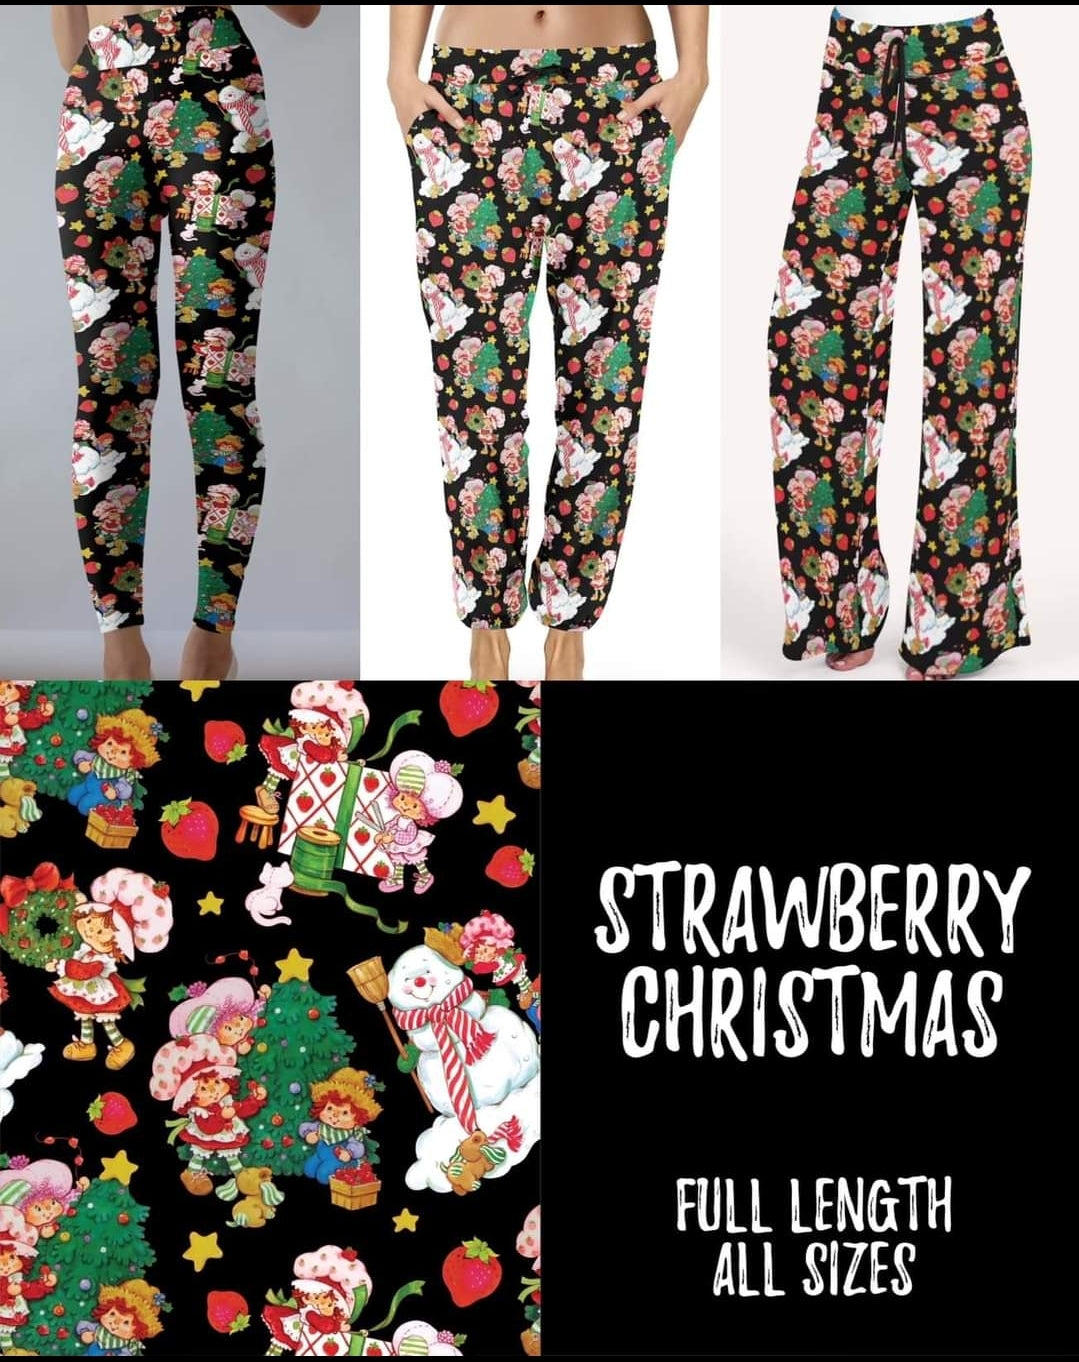 Strawberry Christmas leggings/Joggers/Lounge